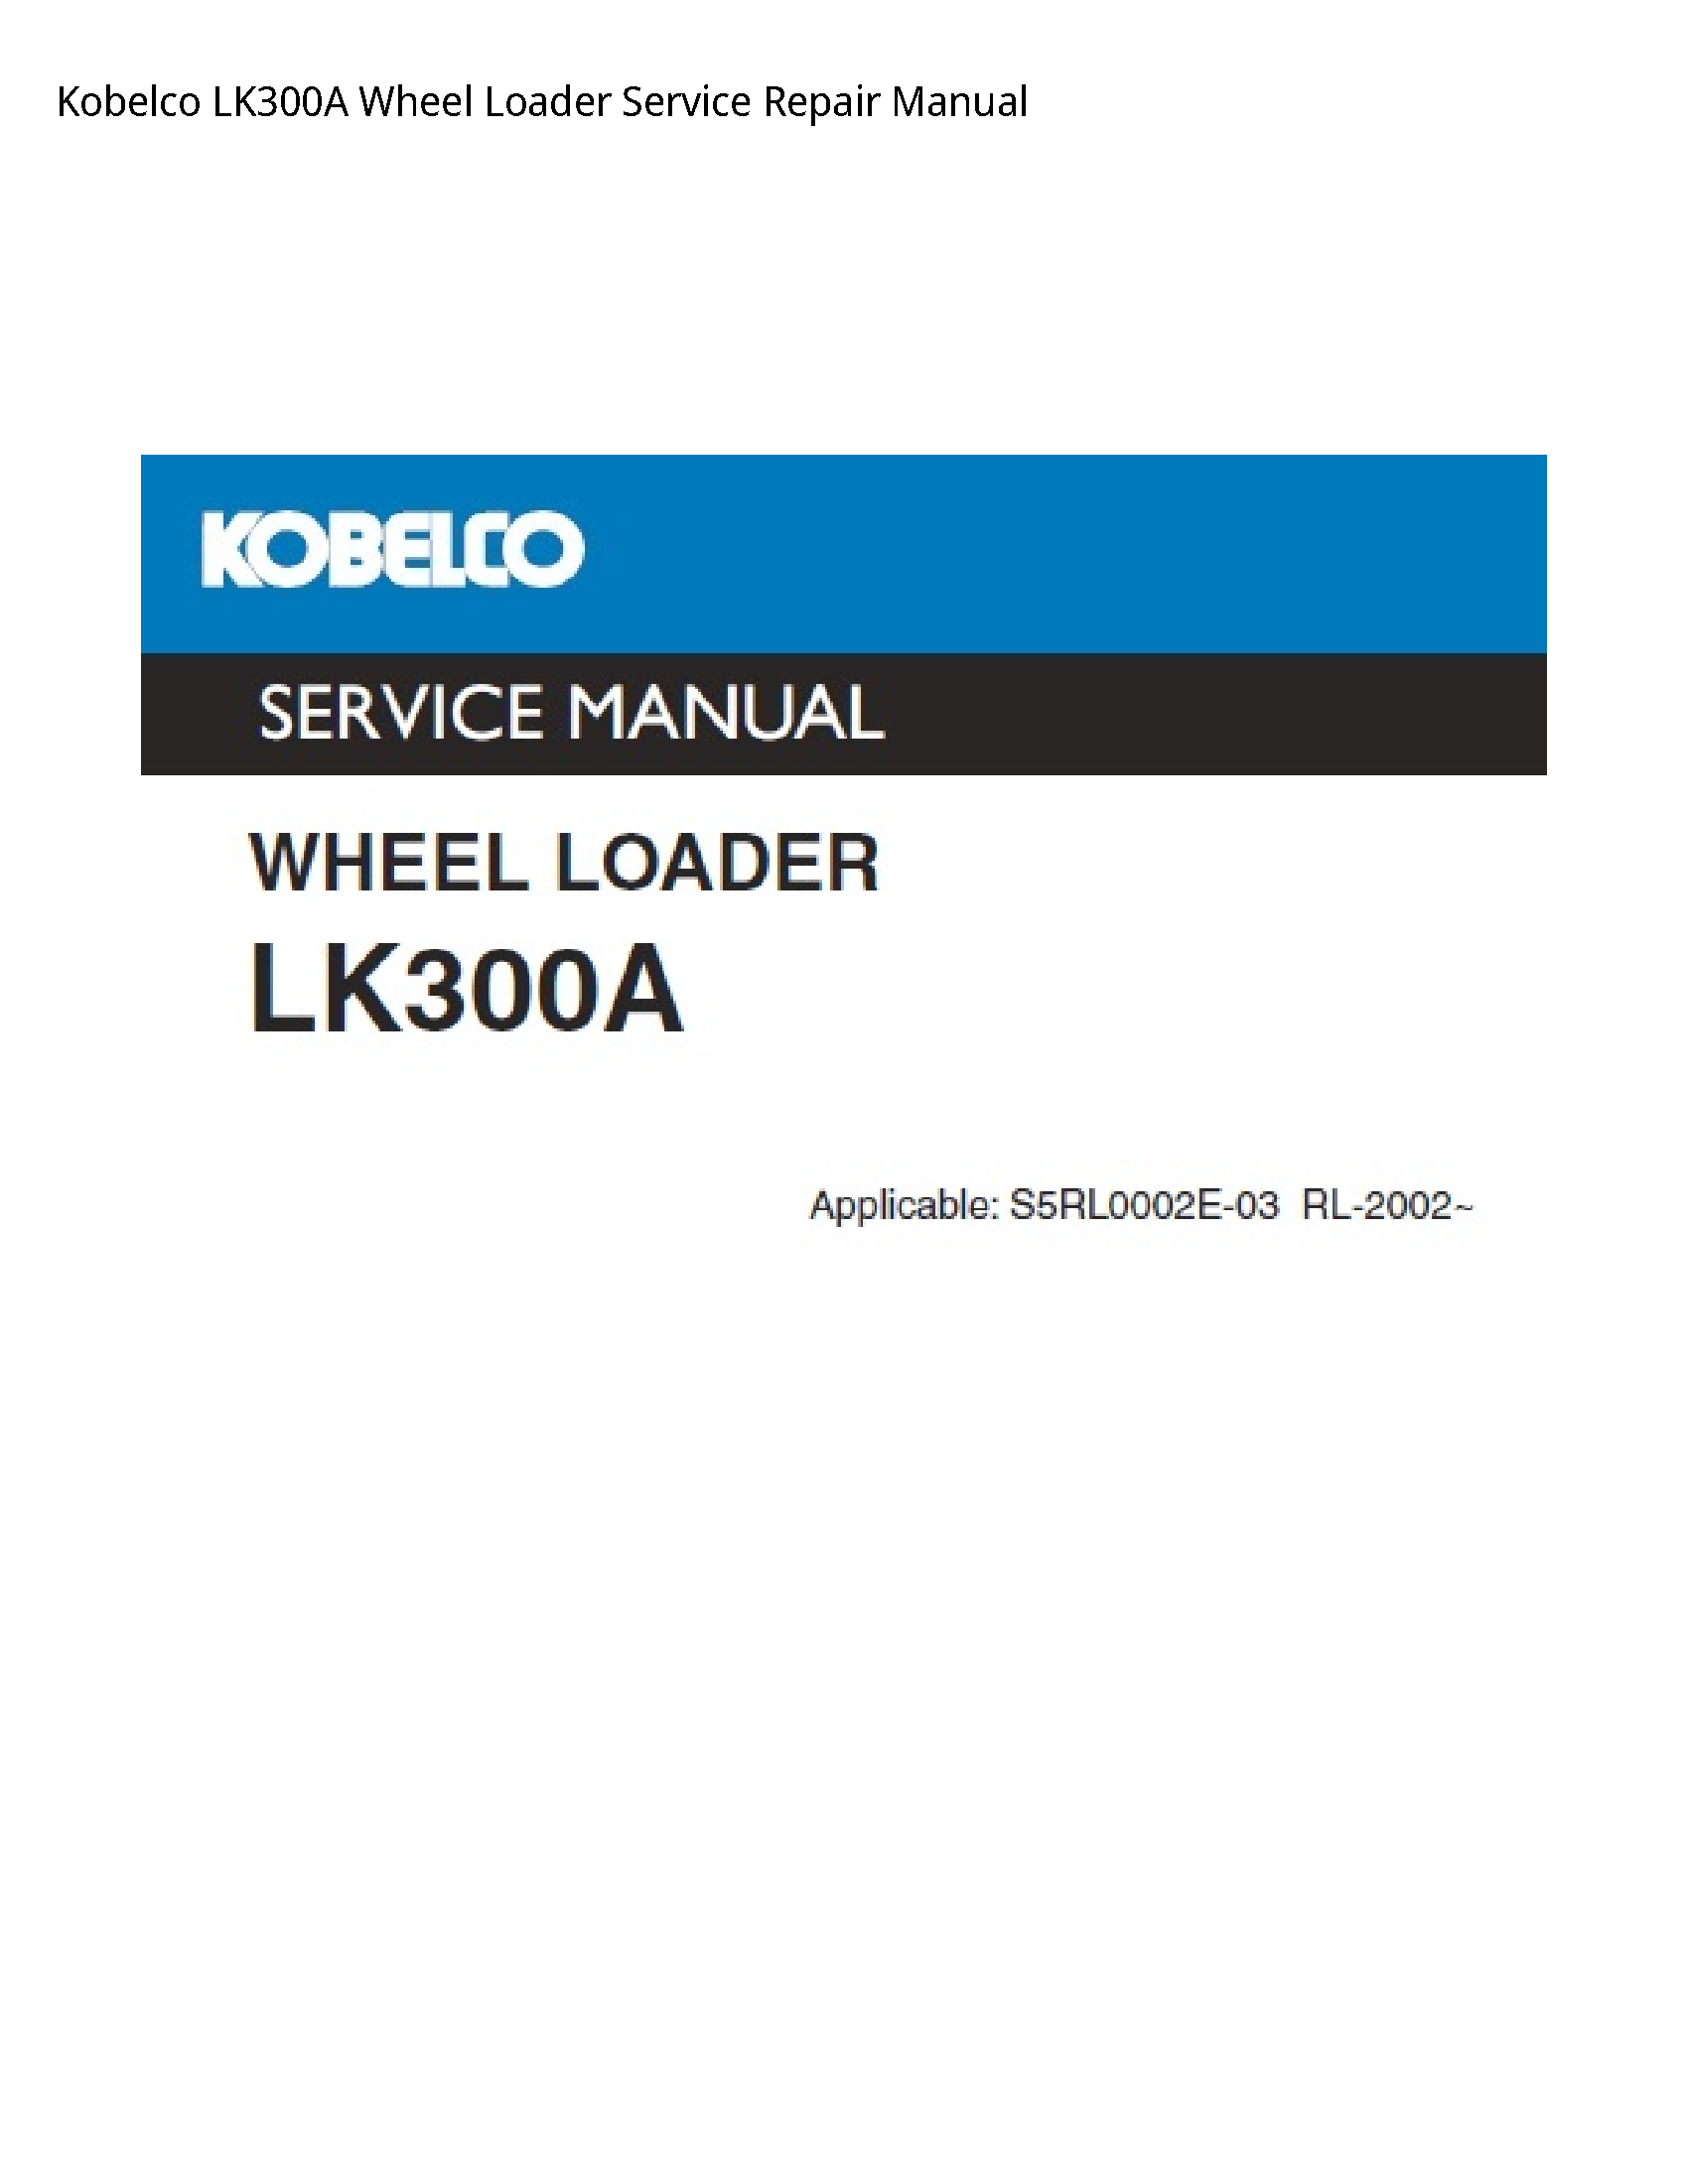 Kobelco LK300A Wheel Loader manual